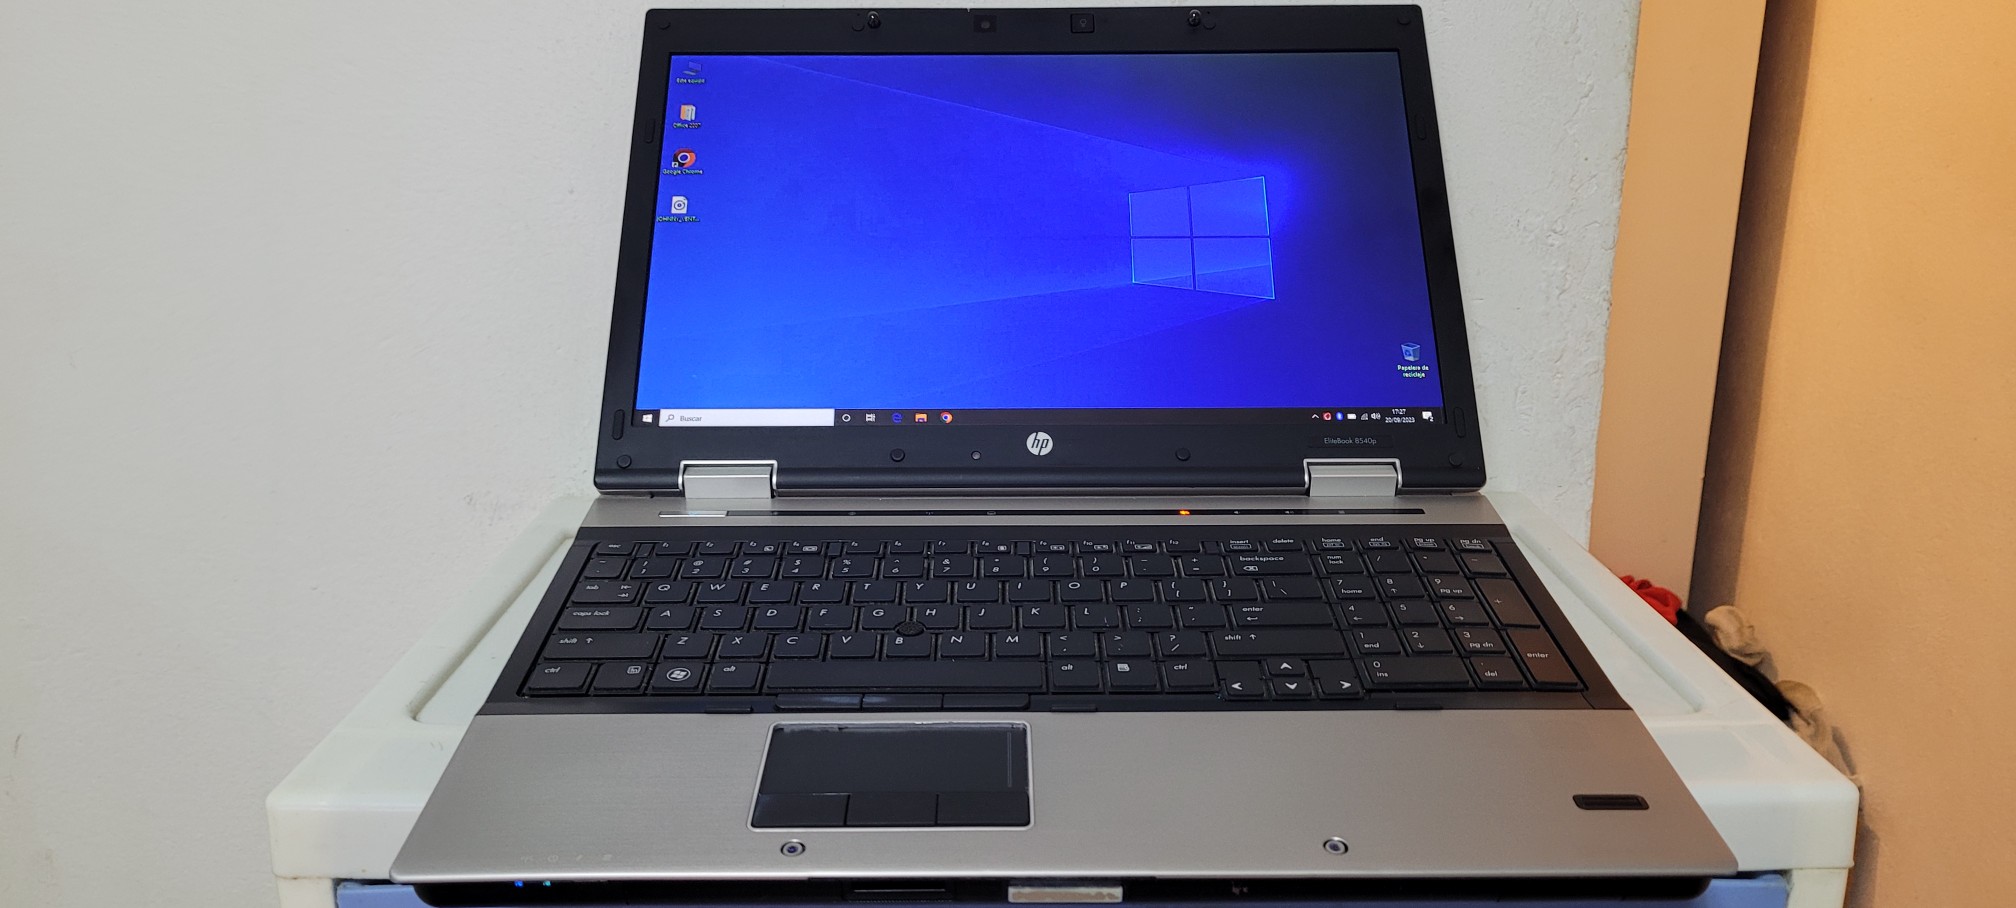 computadoras y laptops - Laptop hp 17 Pulg Core i7 Ram 8gb Disco SSD 128GB Nvidea 4gb Disponible